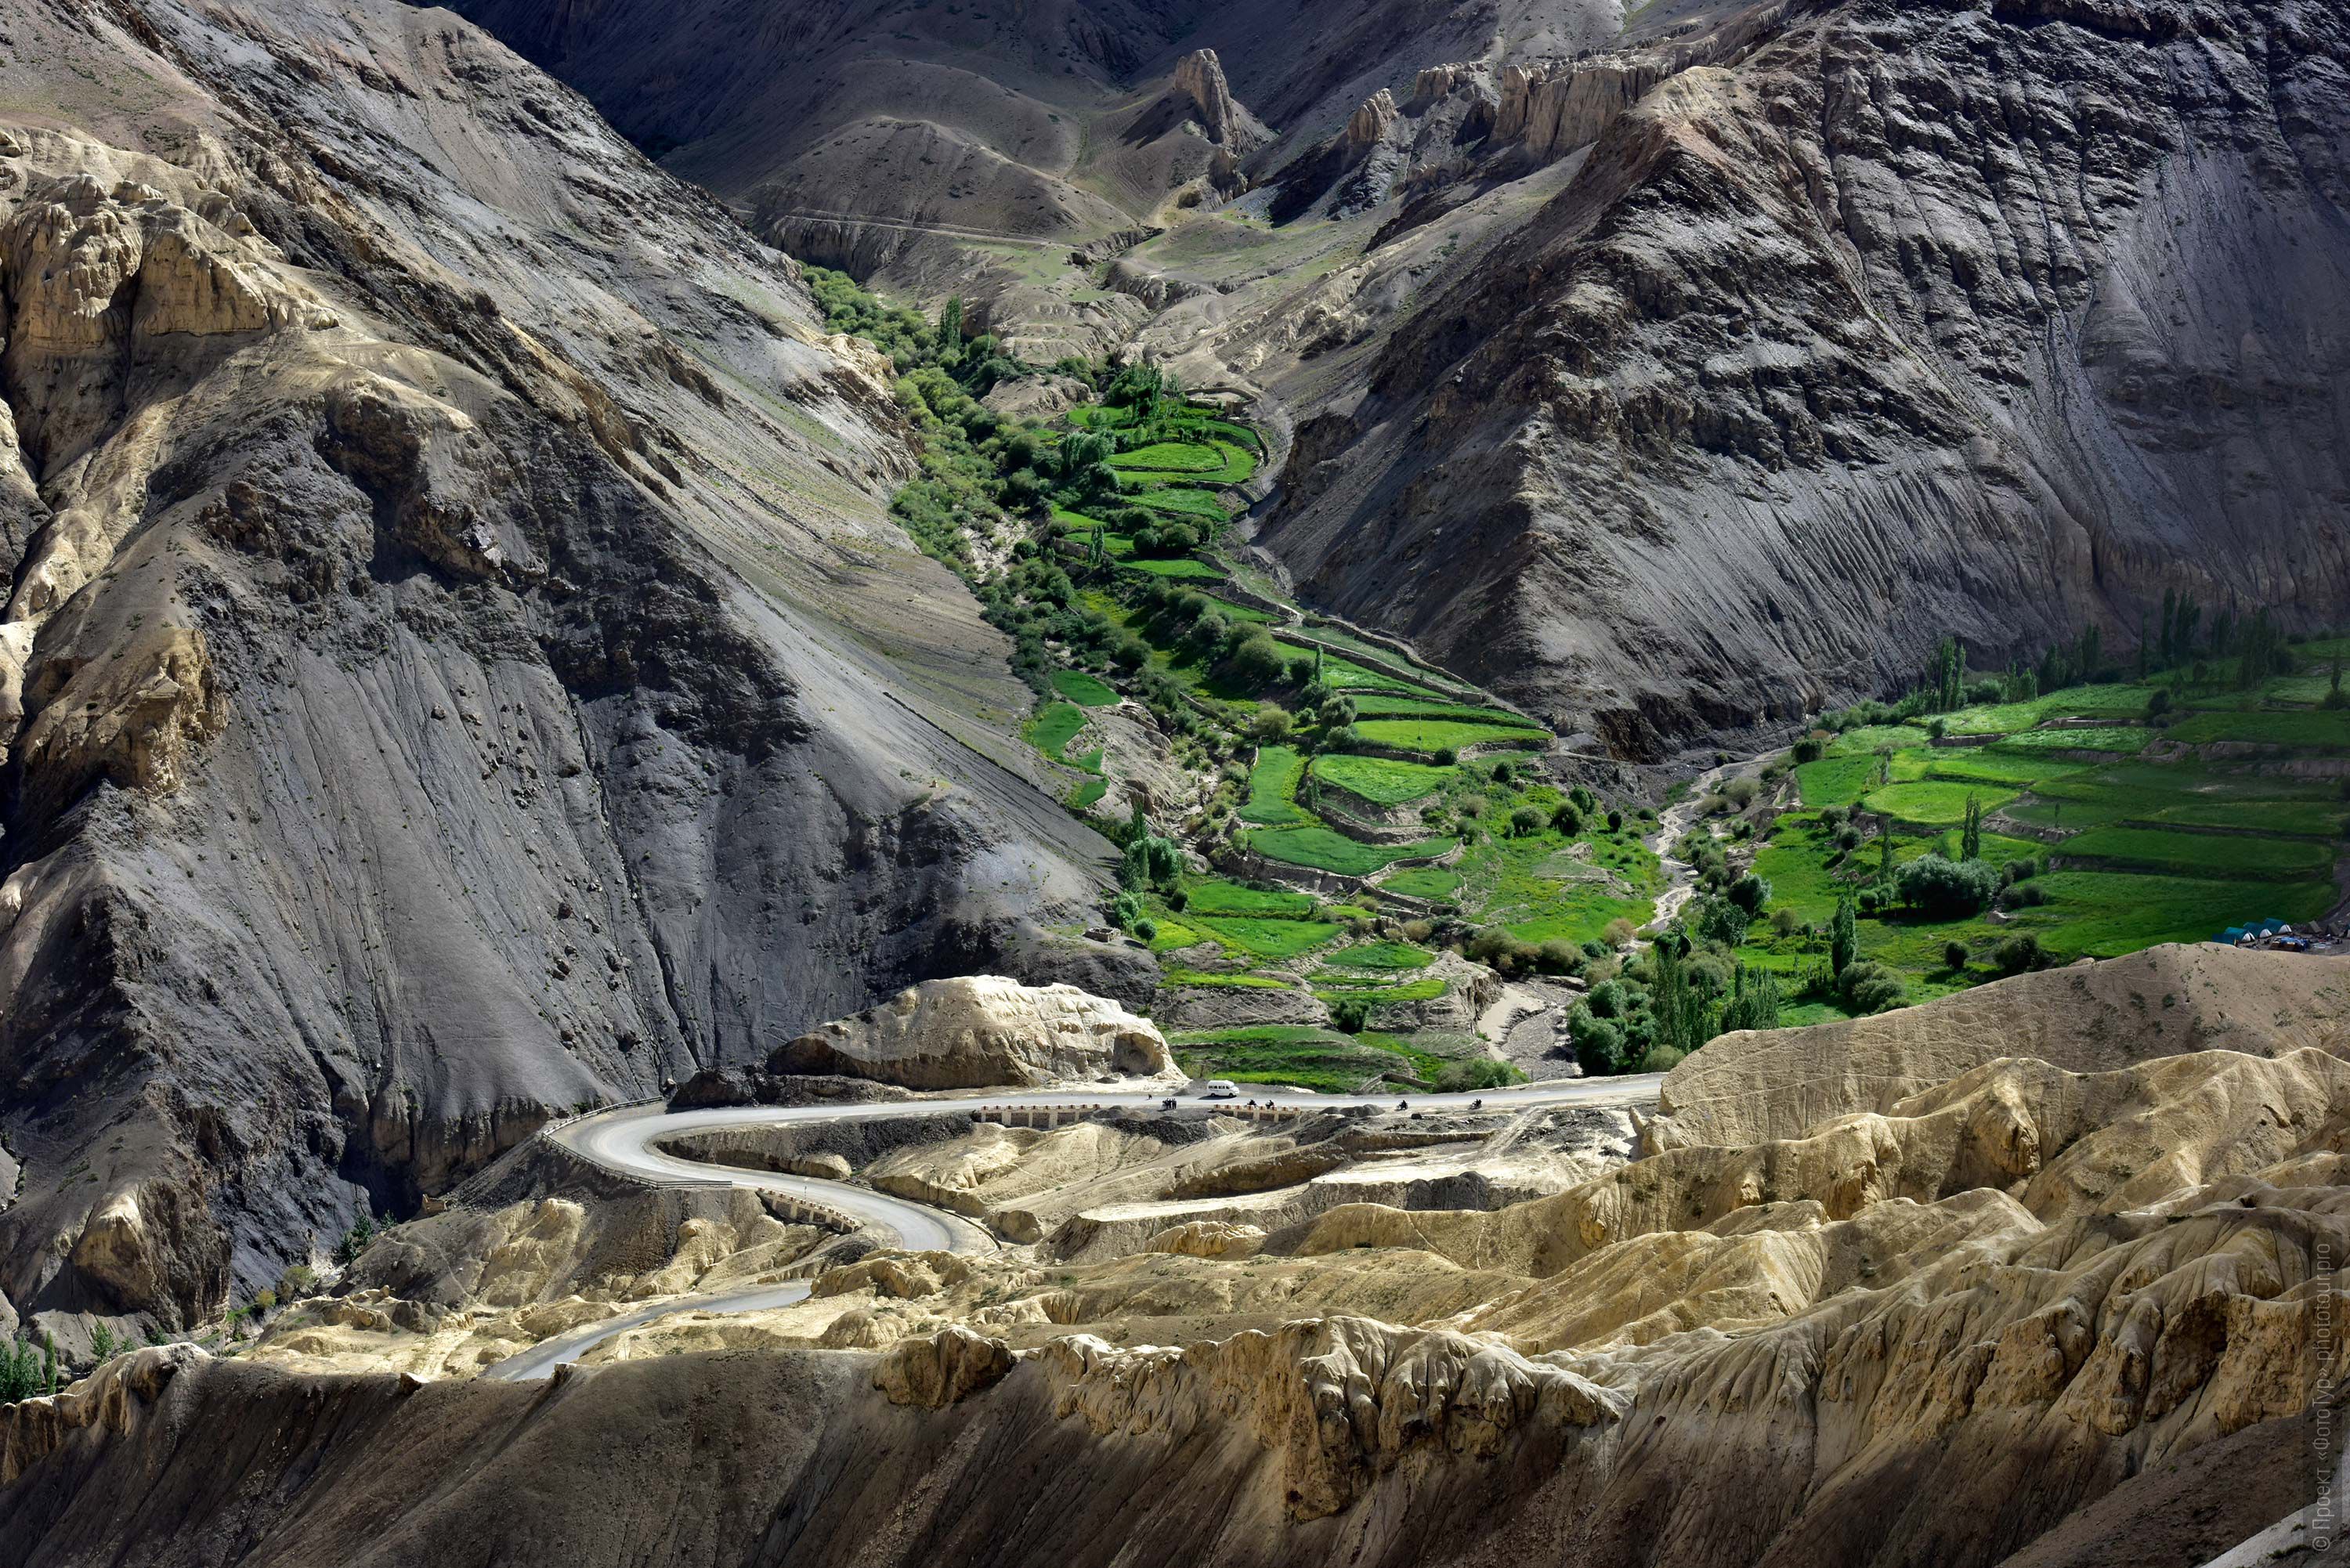 Roads and Fields of Lamayuru, Ladakh Women's Tour, August 31 - September 14, 2019.